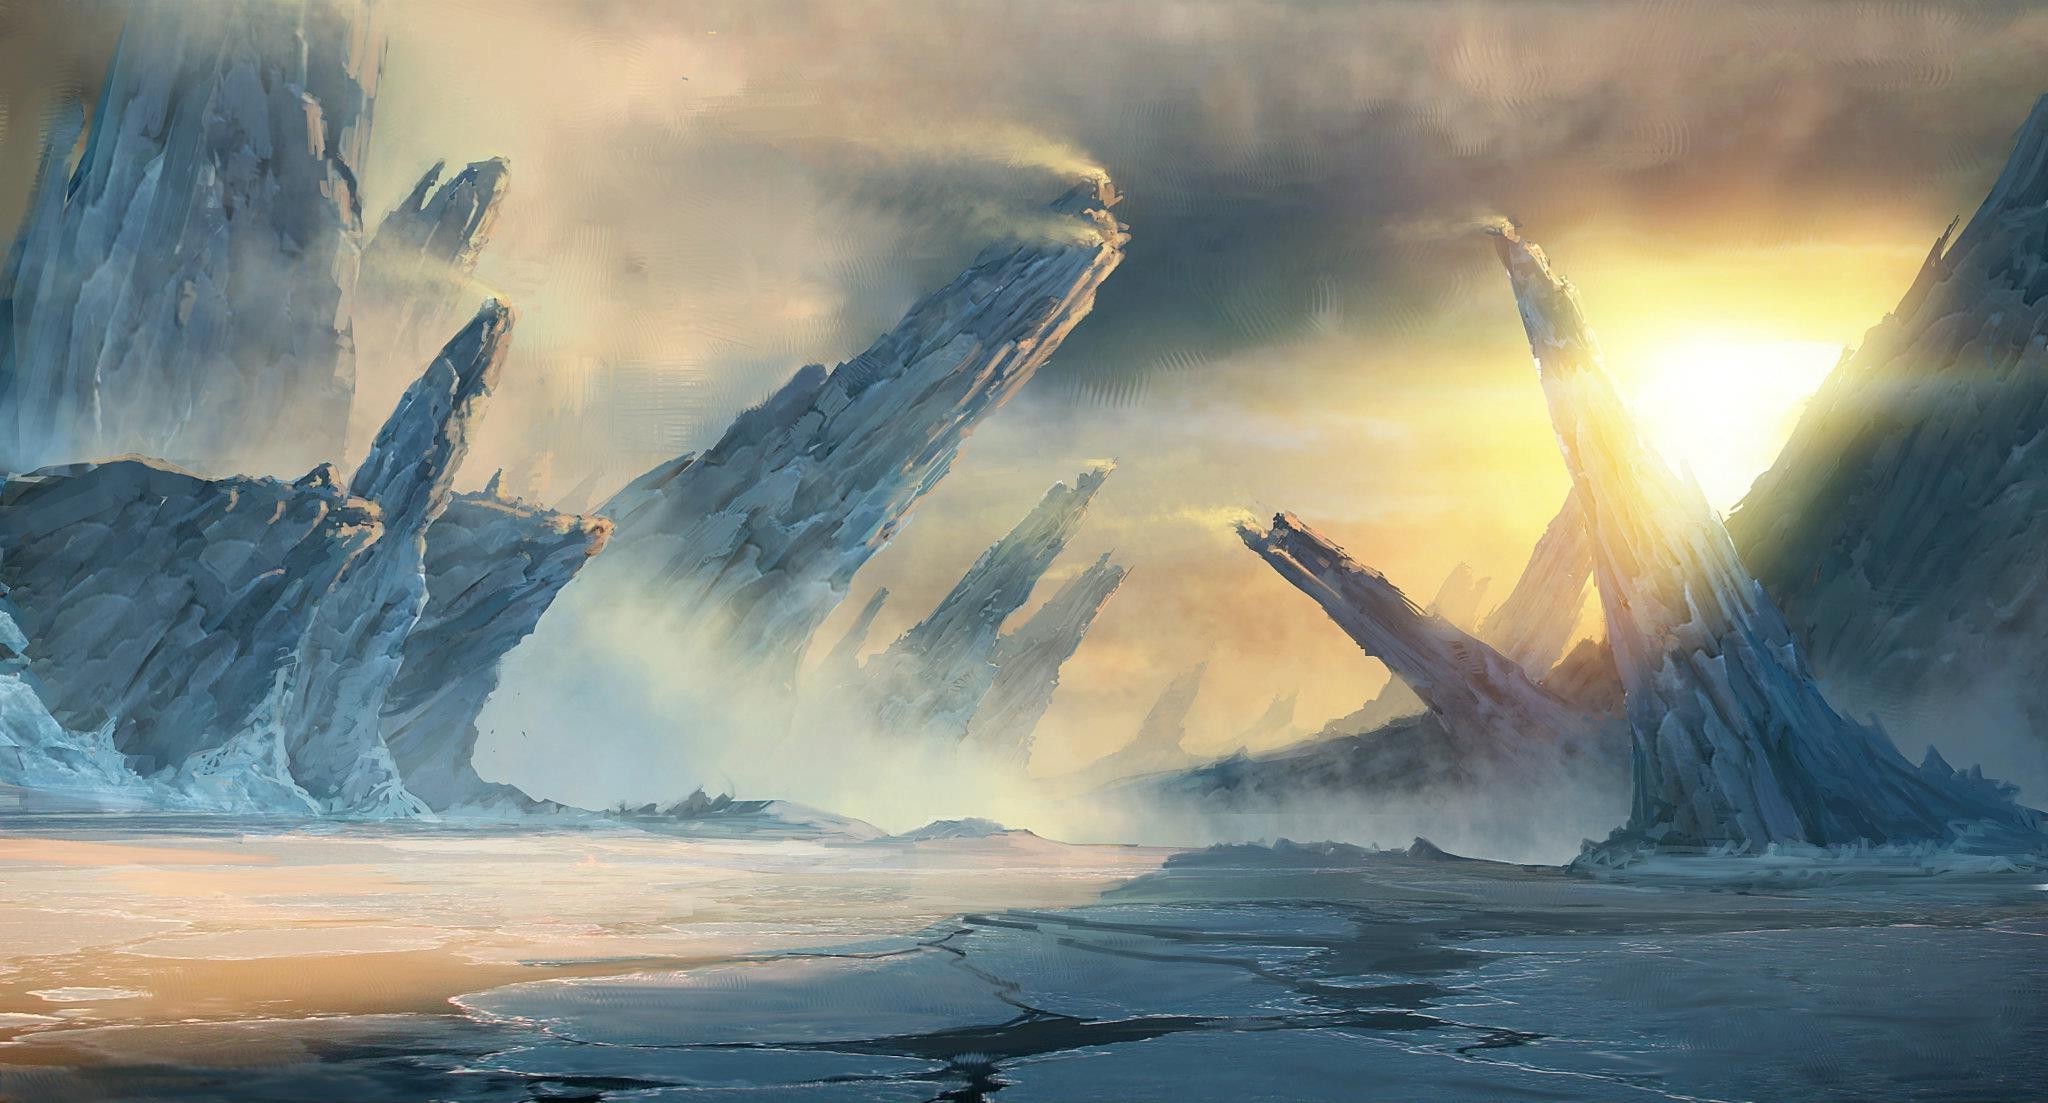 152466-fantasy_art-digital_art-nature-landscape-ice-sunlight-mountain-rock_formation.jpg